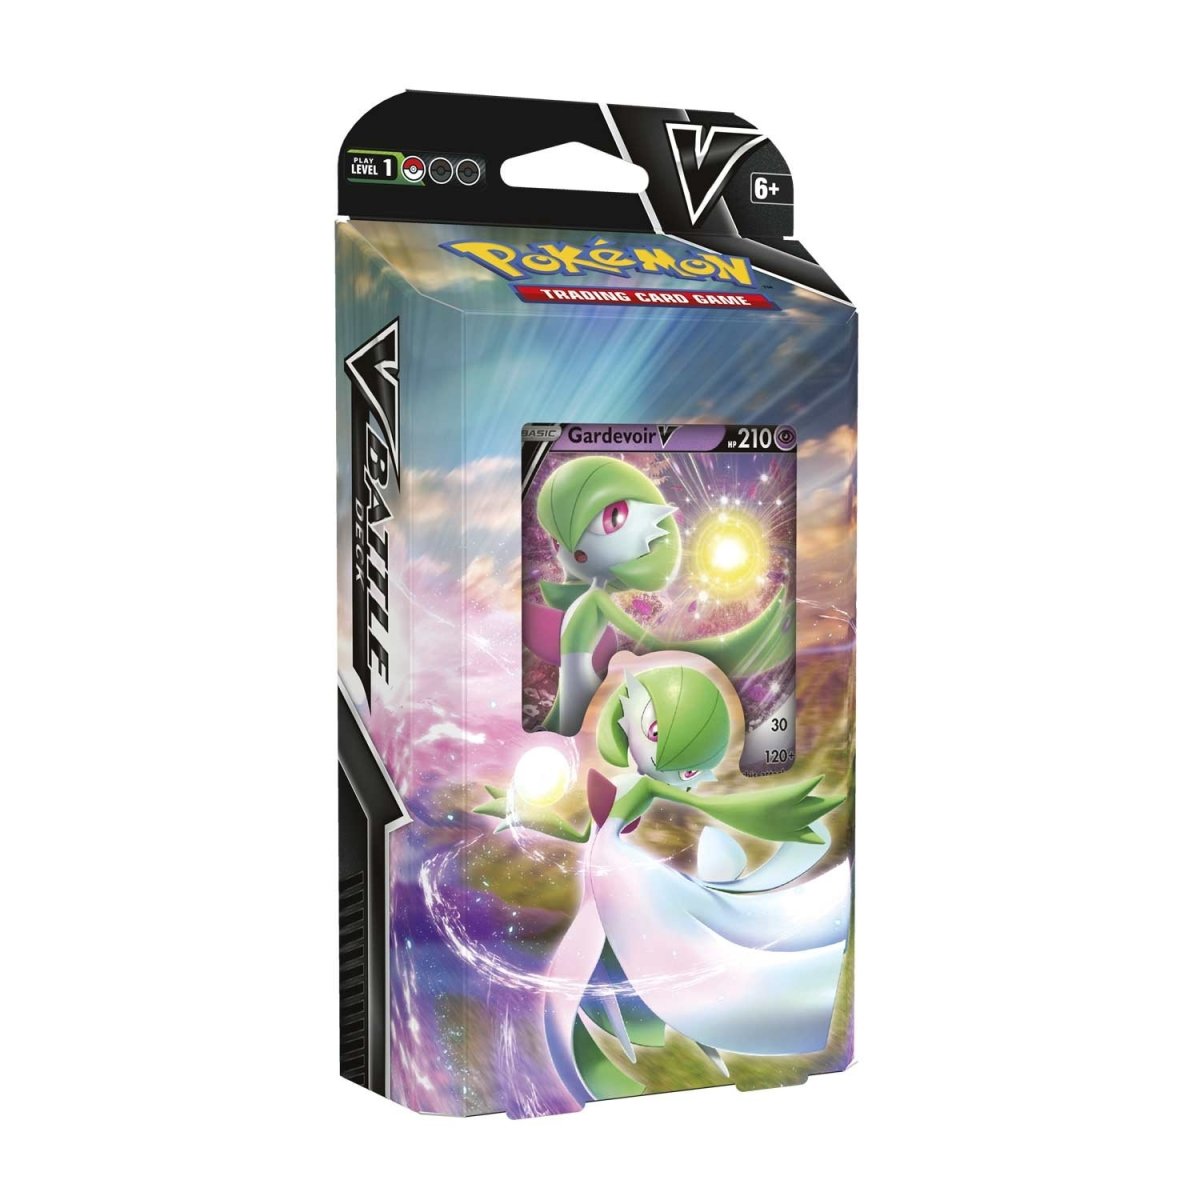 Pokémon TCG: Gardevoir V Battle Deck (Play Level 1) 63 Cards (New